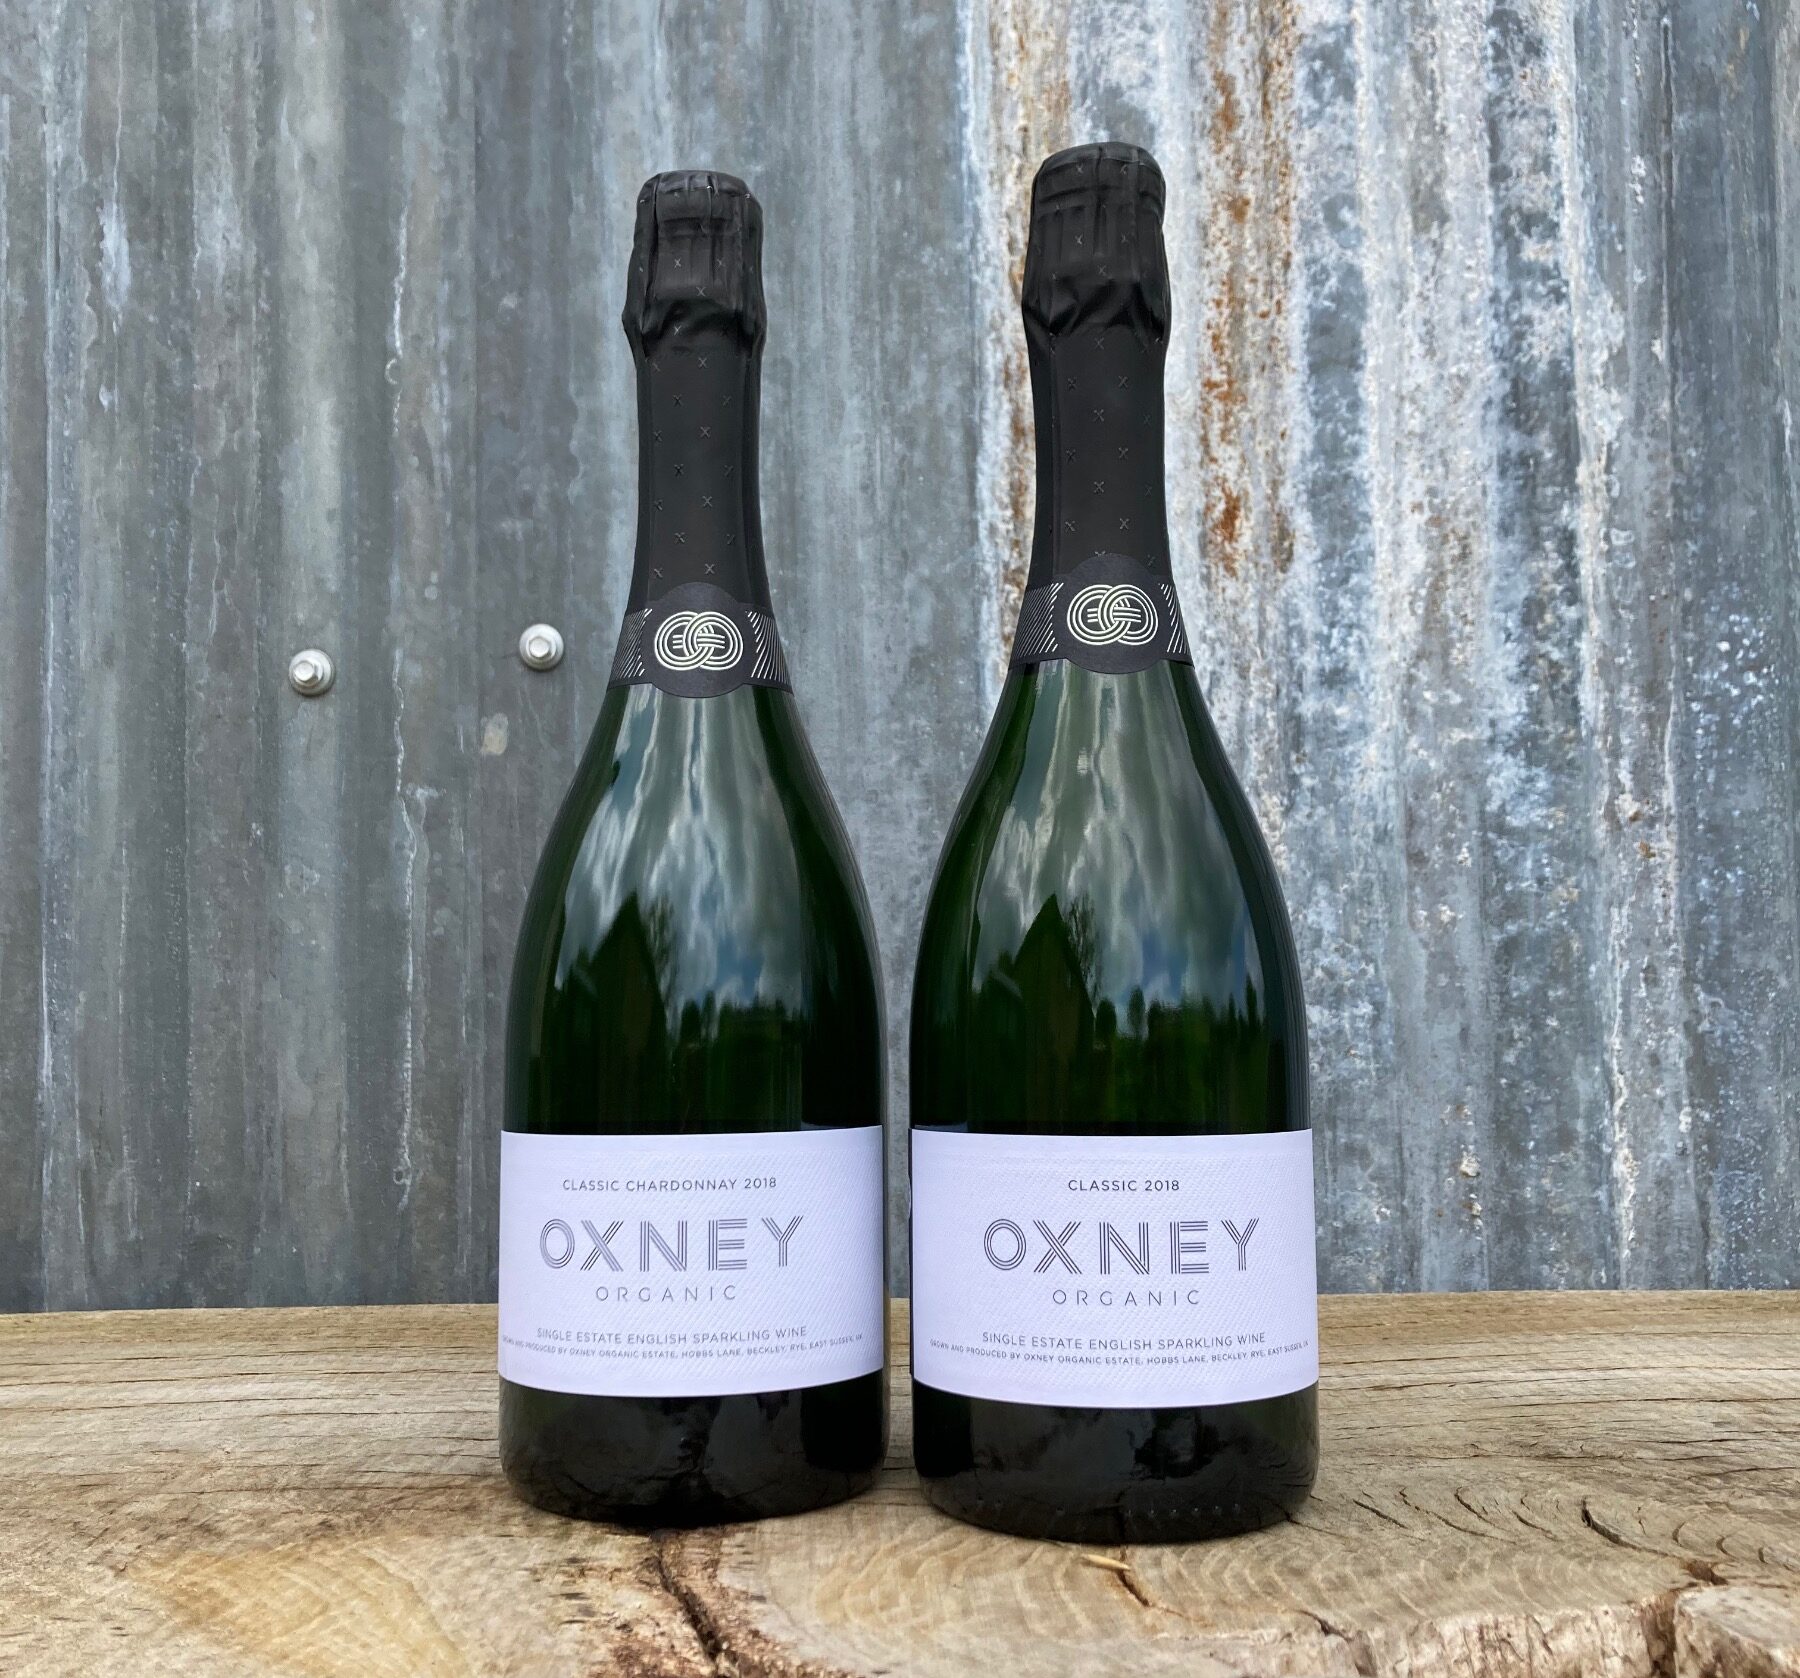 Oxney English sparkling wine 2018 Classic 2018 Classic Chardonnay 2018